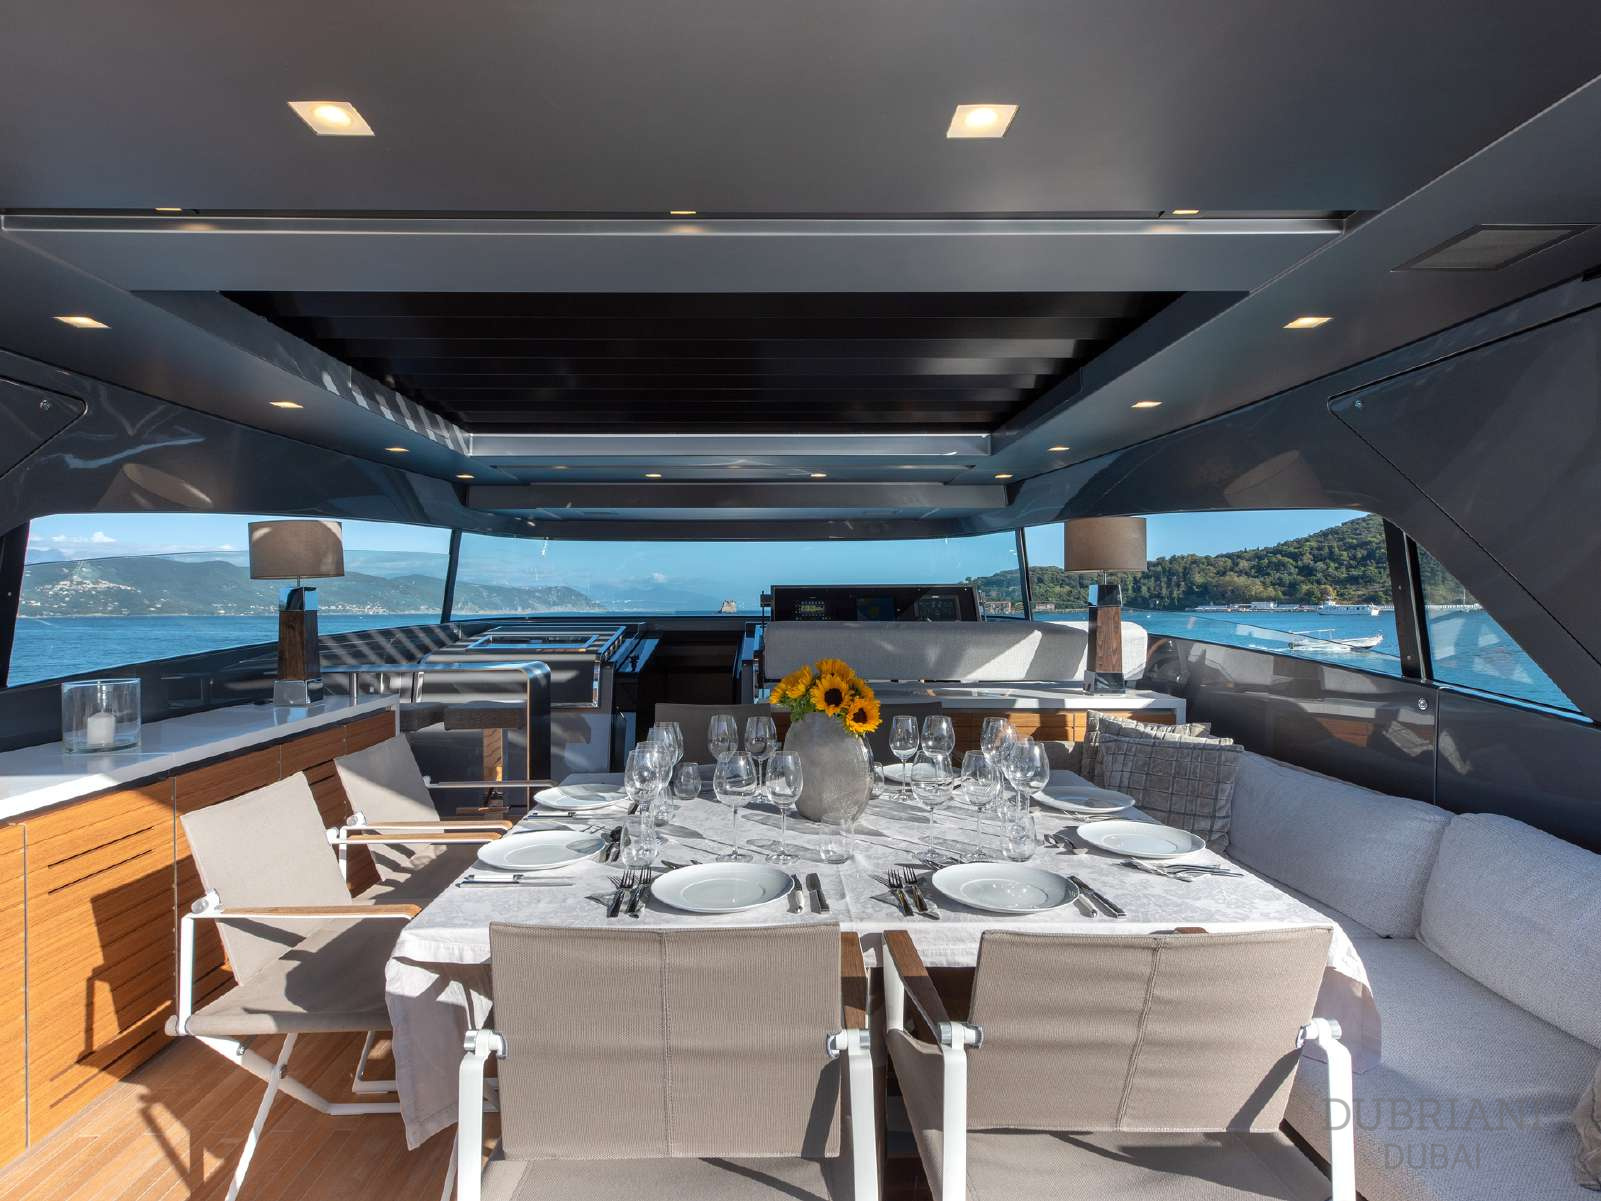 Luxurious interior of the San Lorenzo SX88 yacht.